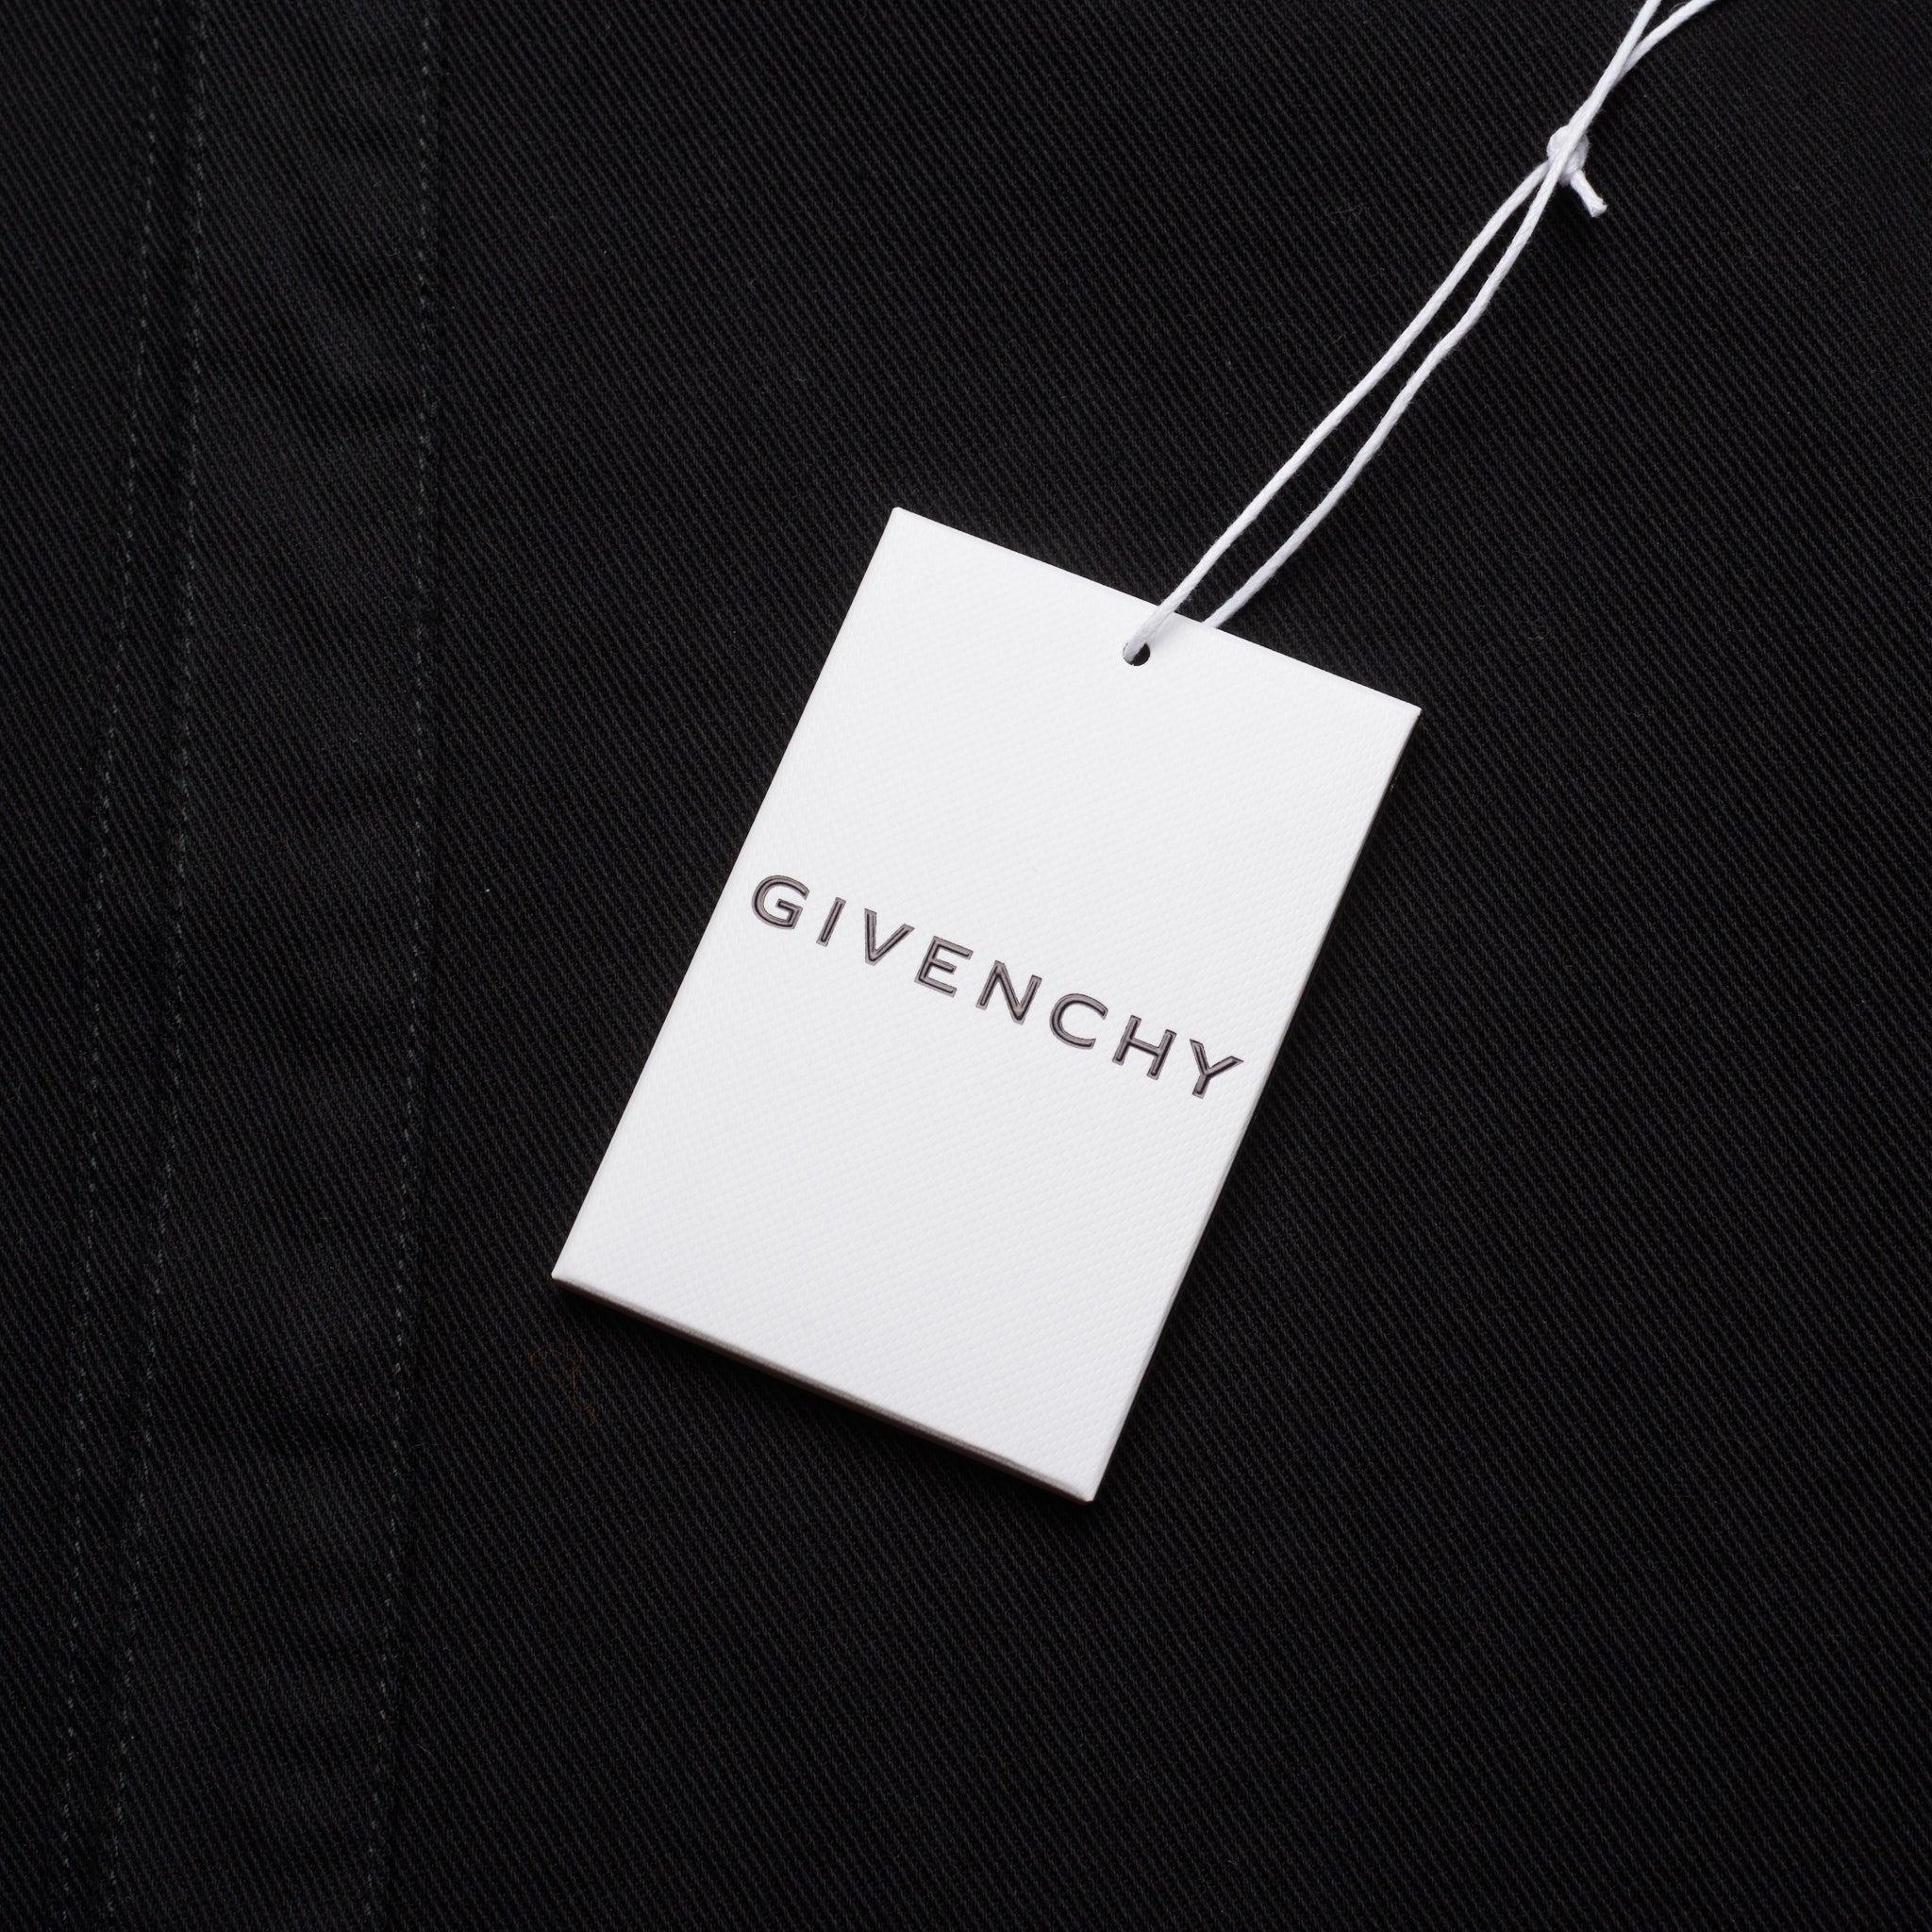 GIVENCHY Paris Black Denim Shirt Jacket NEW Size XL GIVENCHY